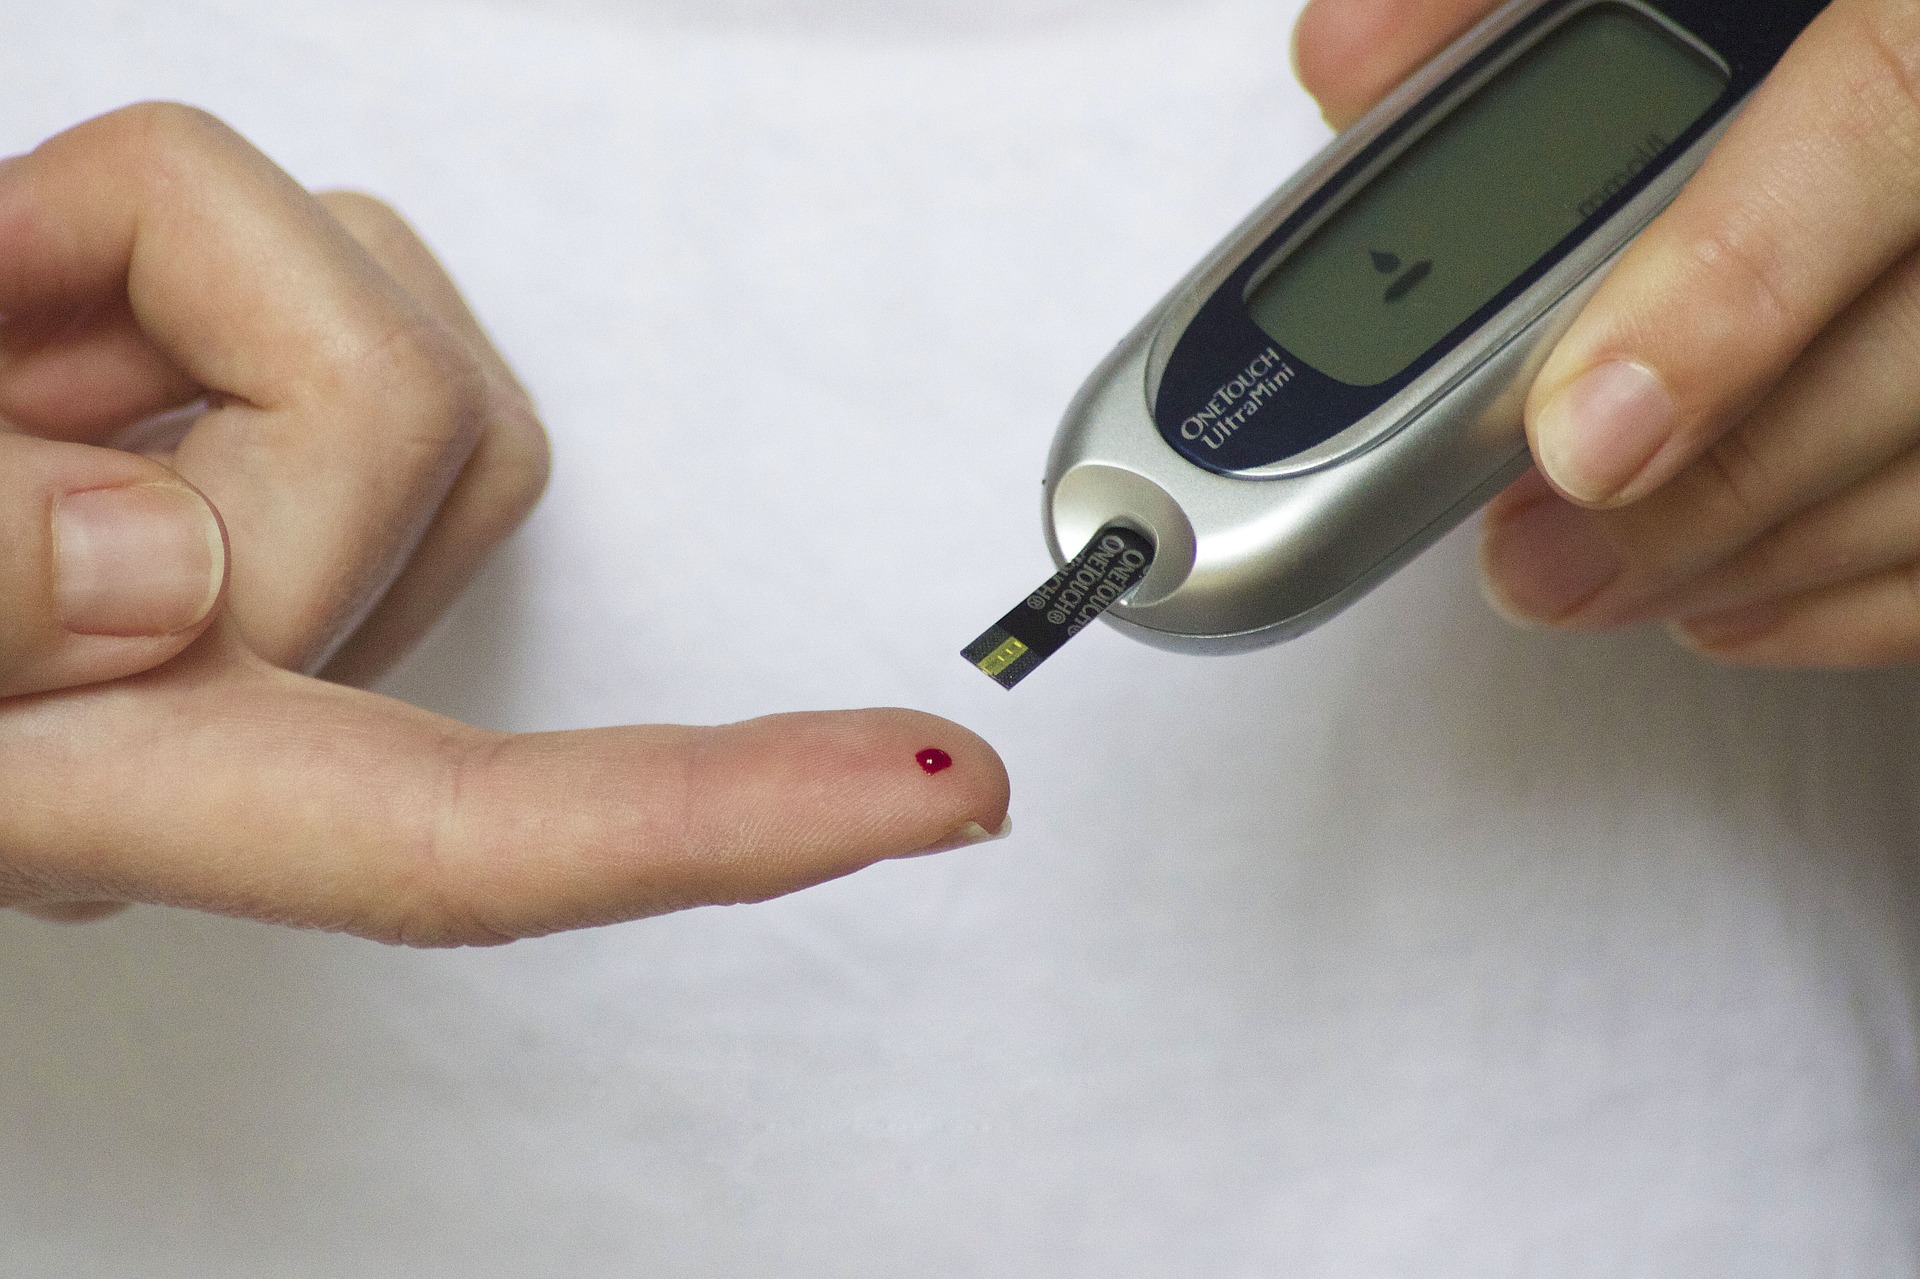 Diabetes blood sugar test